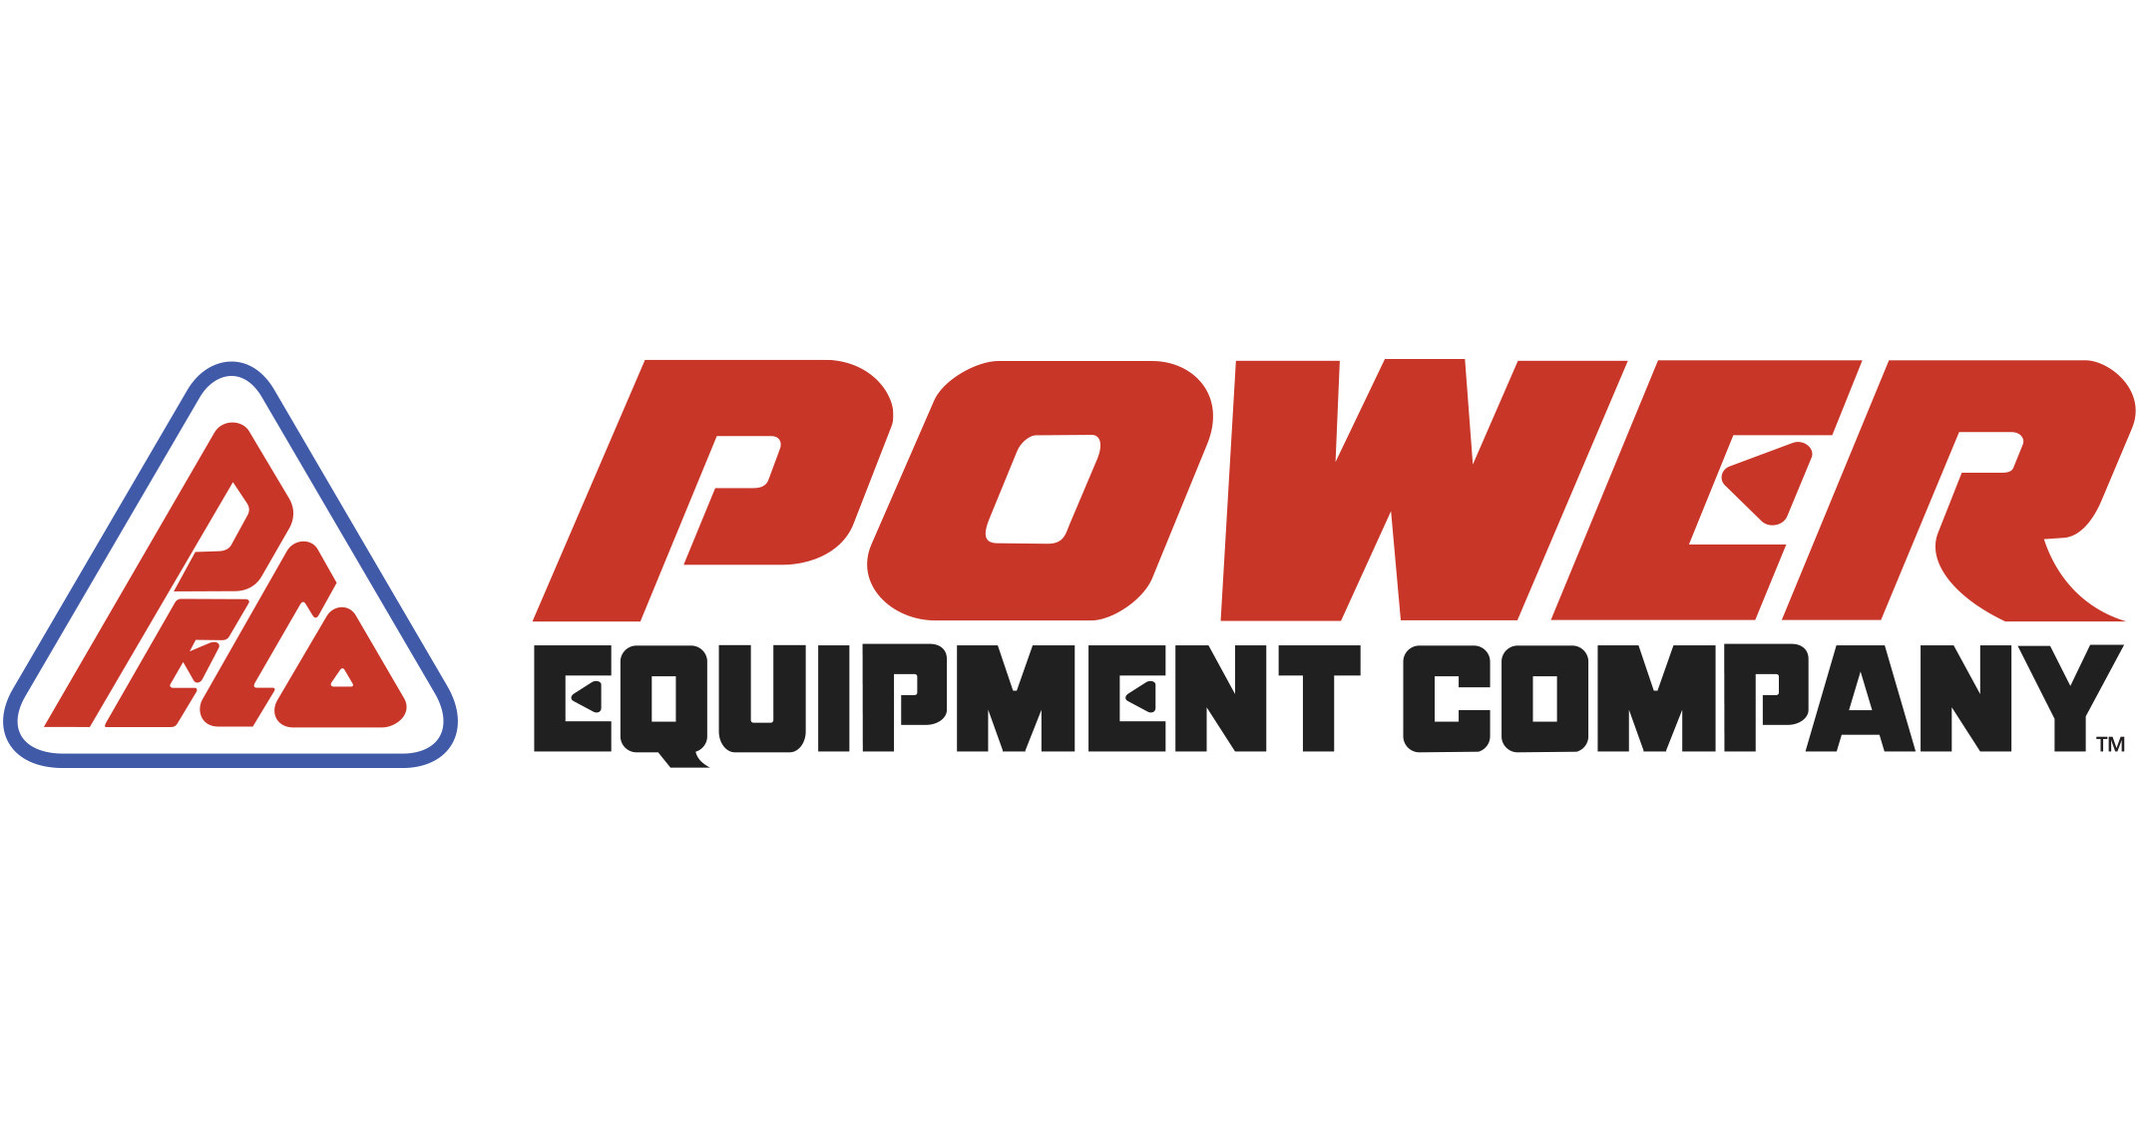 Power Equipment Company Acquires Golden Equipment Company